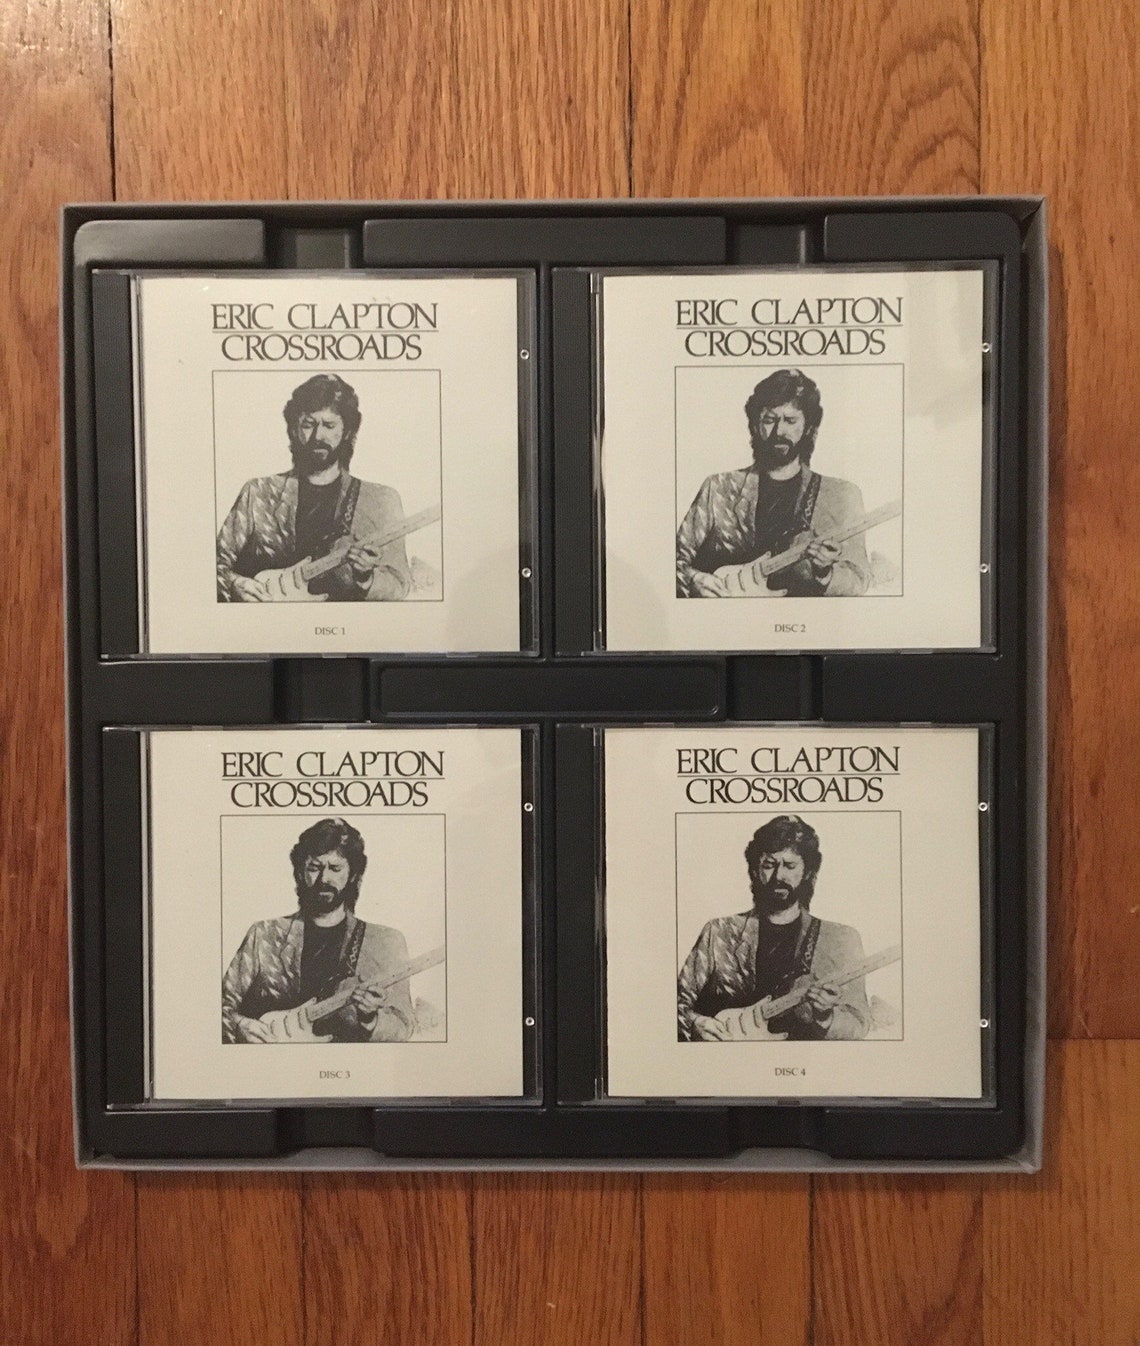 Eric Clapton crossroads Compilation Box CD Set Etsy